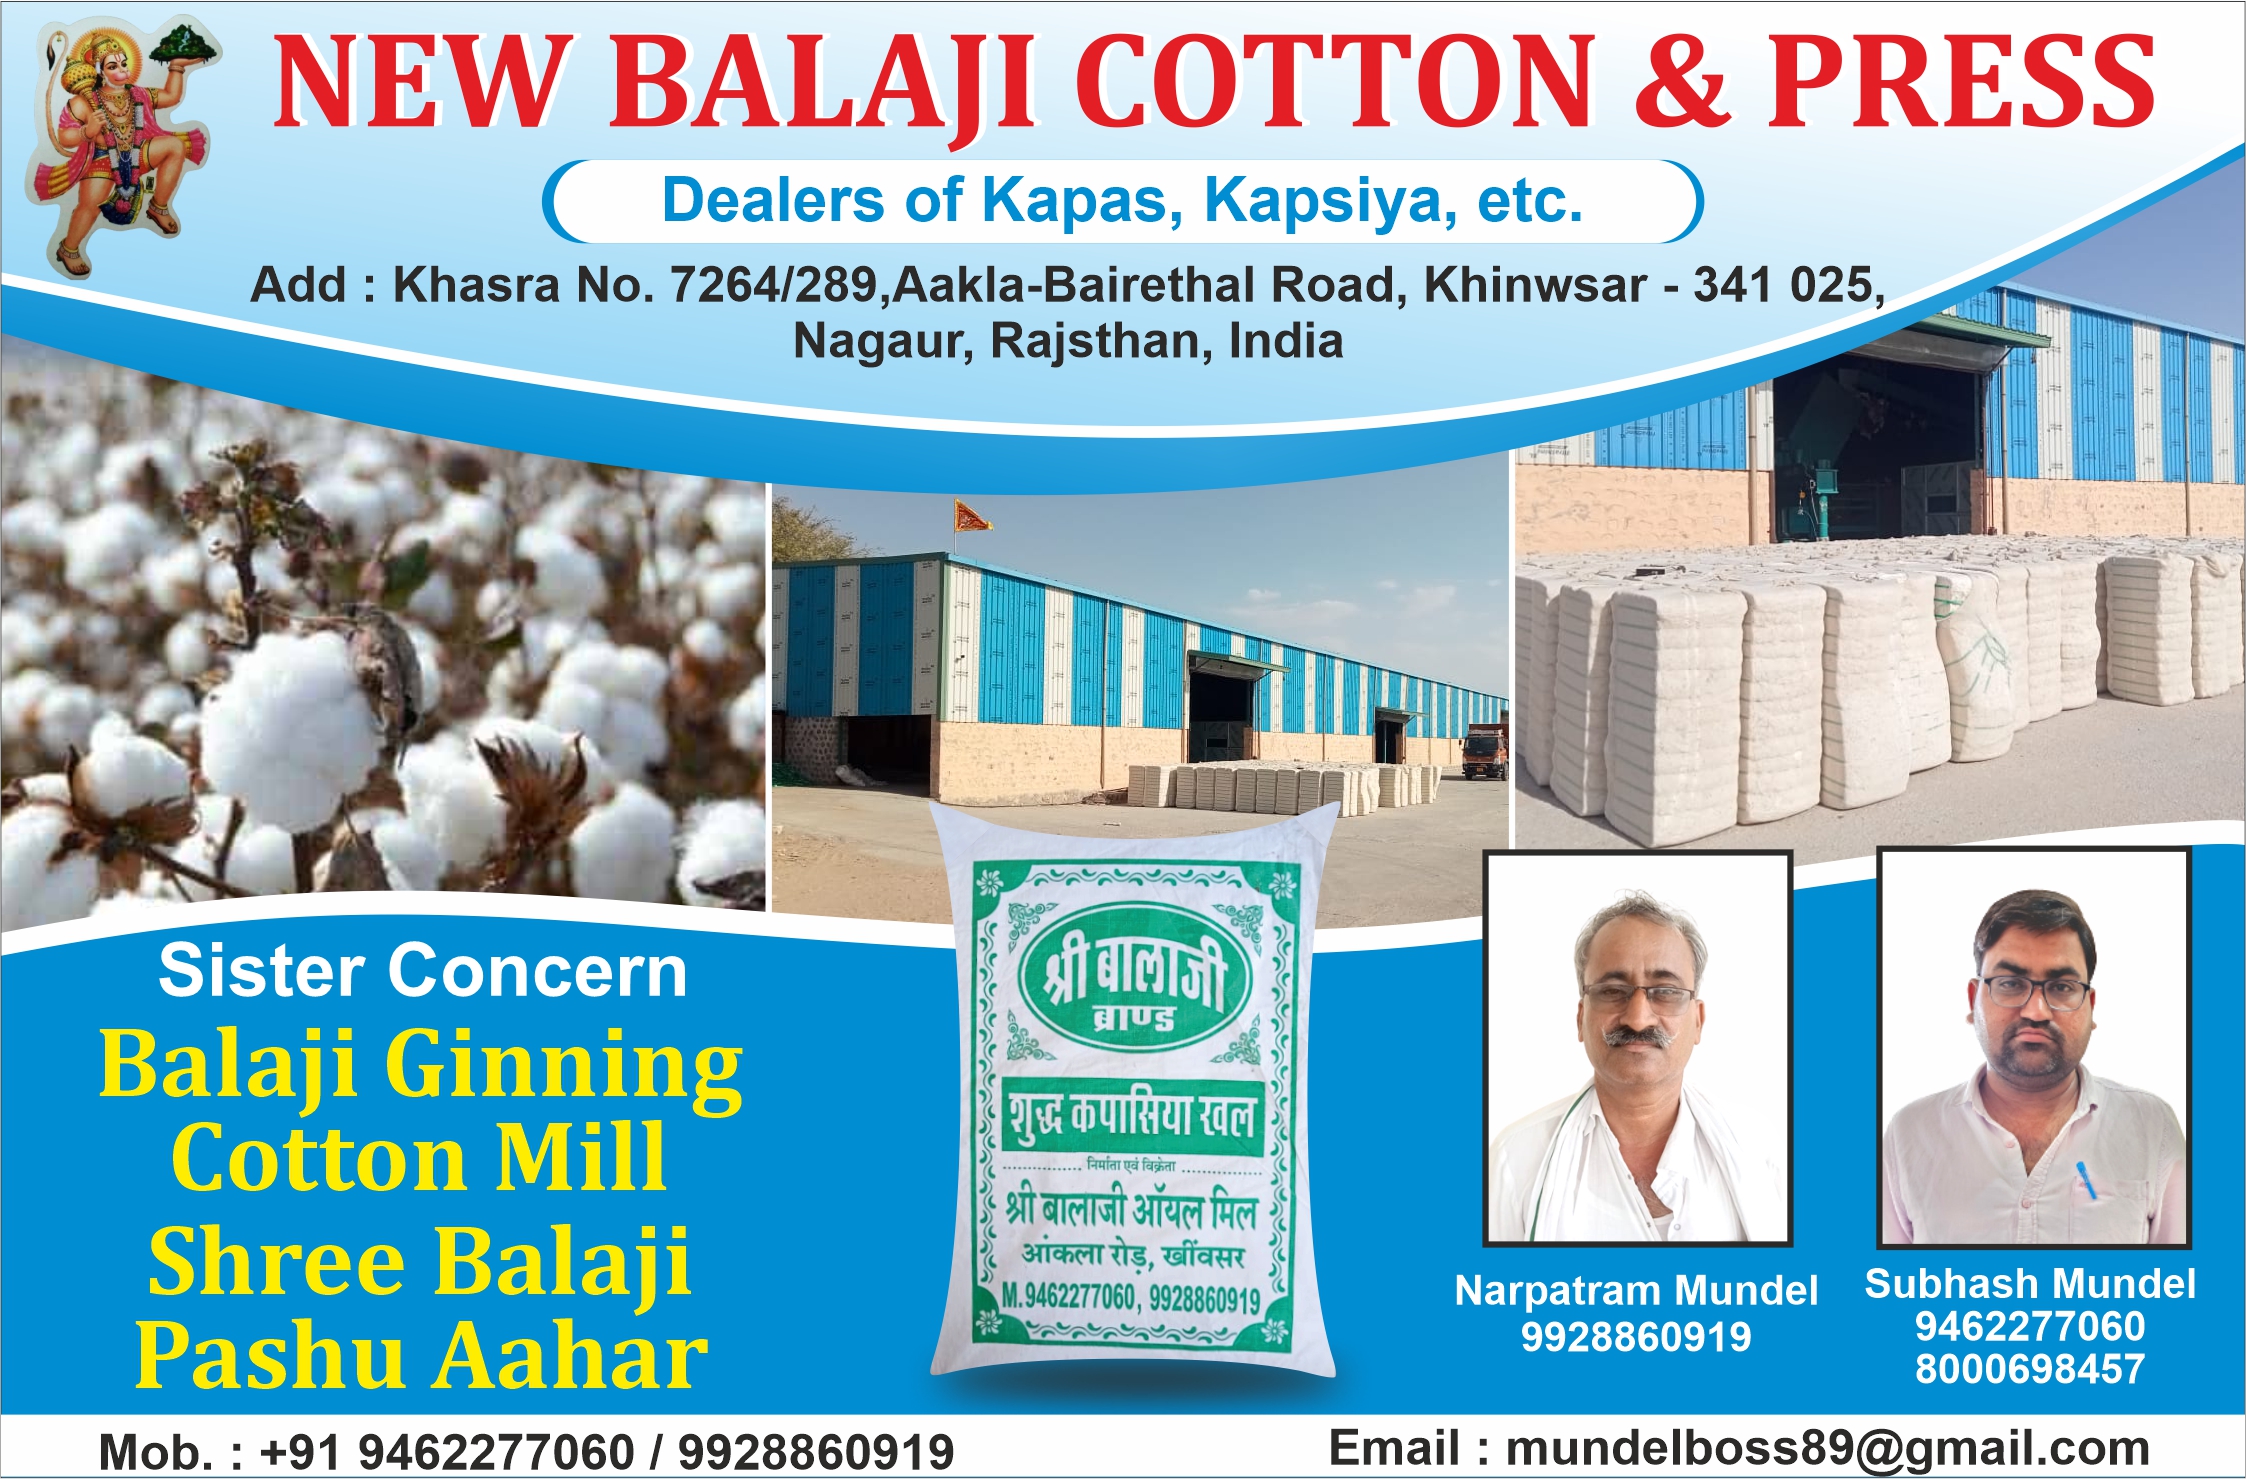 New Balaji Cotton & Press